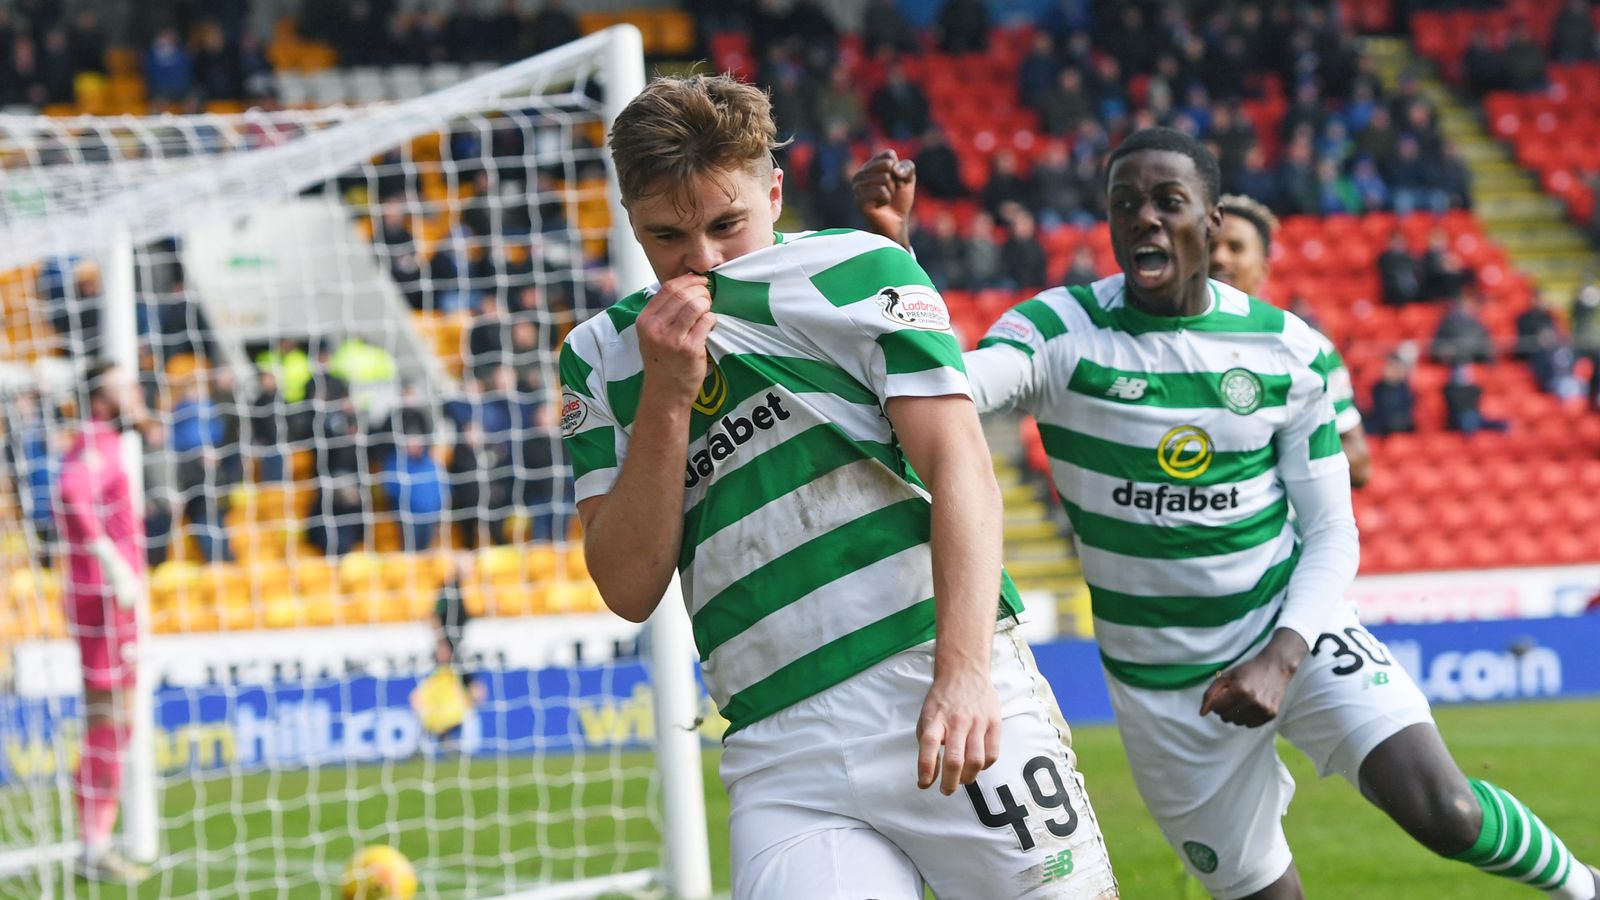 St J'stone 0 - 2 Celtic - Match Report & Highlights